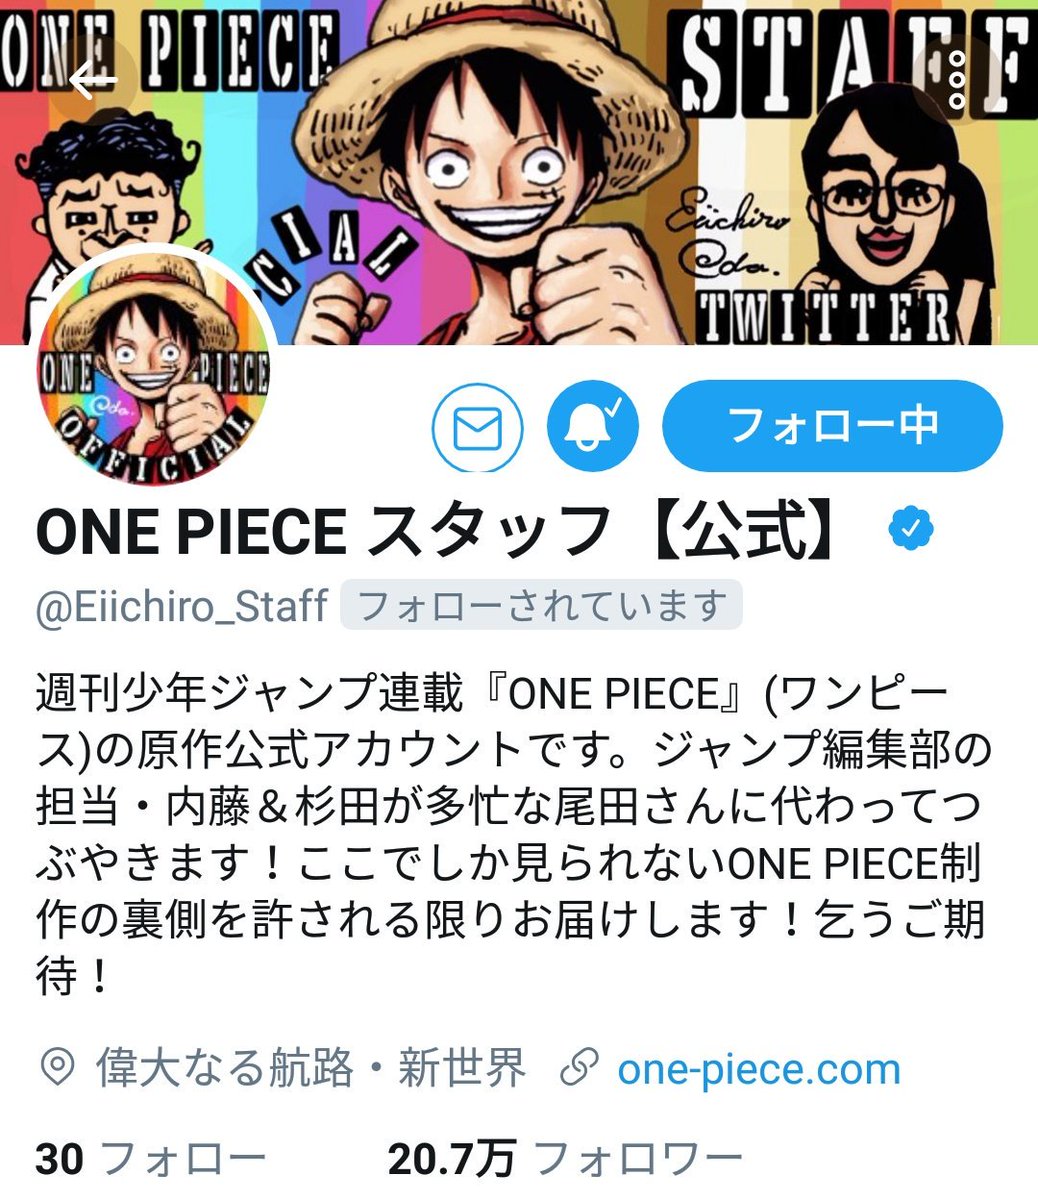 One Pieceが大好きな神木 スーパーカミキカンデ Onepieceスタッフ公式アカウントのアイコンとヘッダーが尾田さん描きおろしになってる お宝すぎる 内藤さん杉田さんおめでとうございます Eiichiro Staff